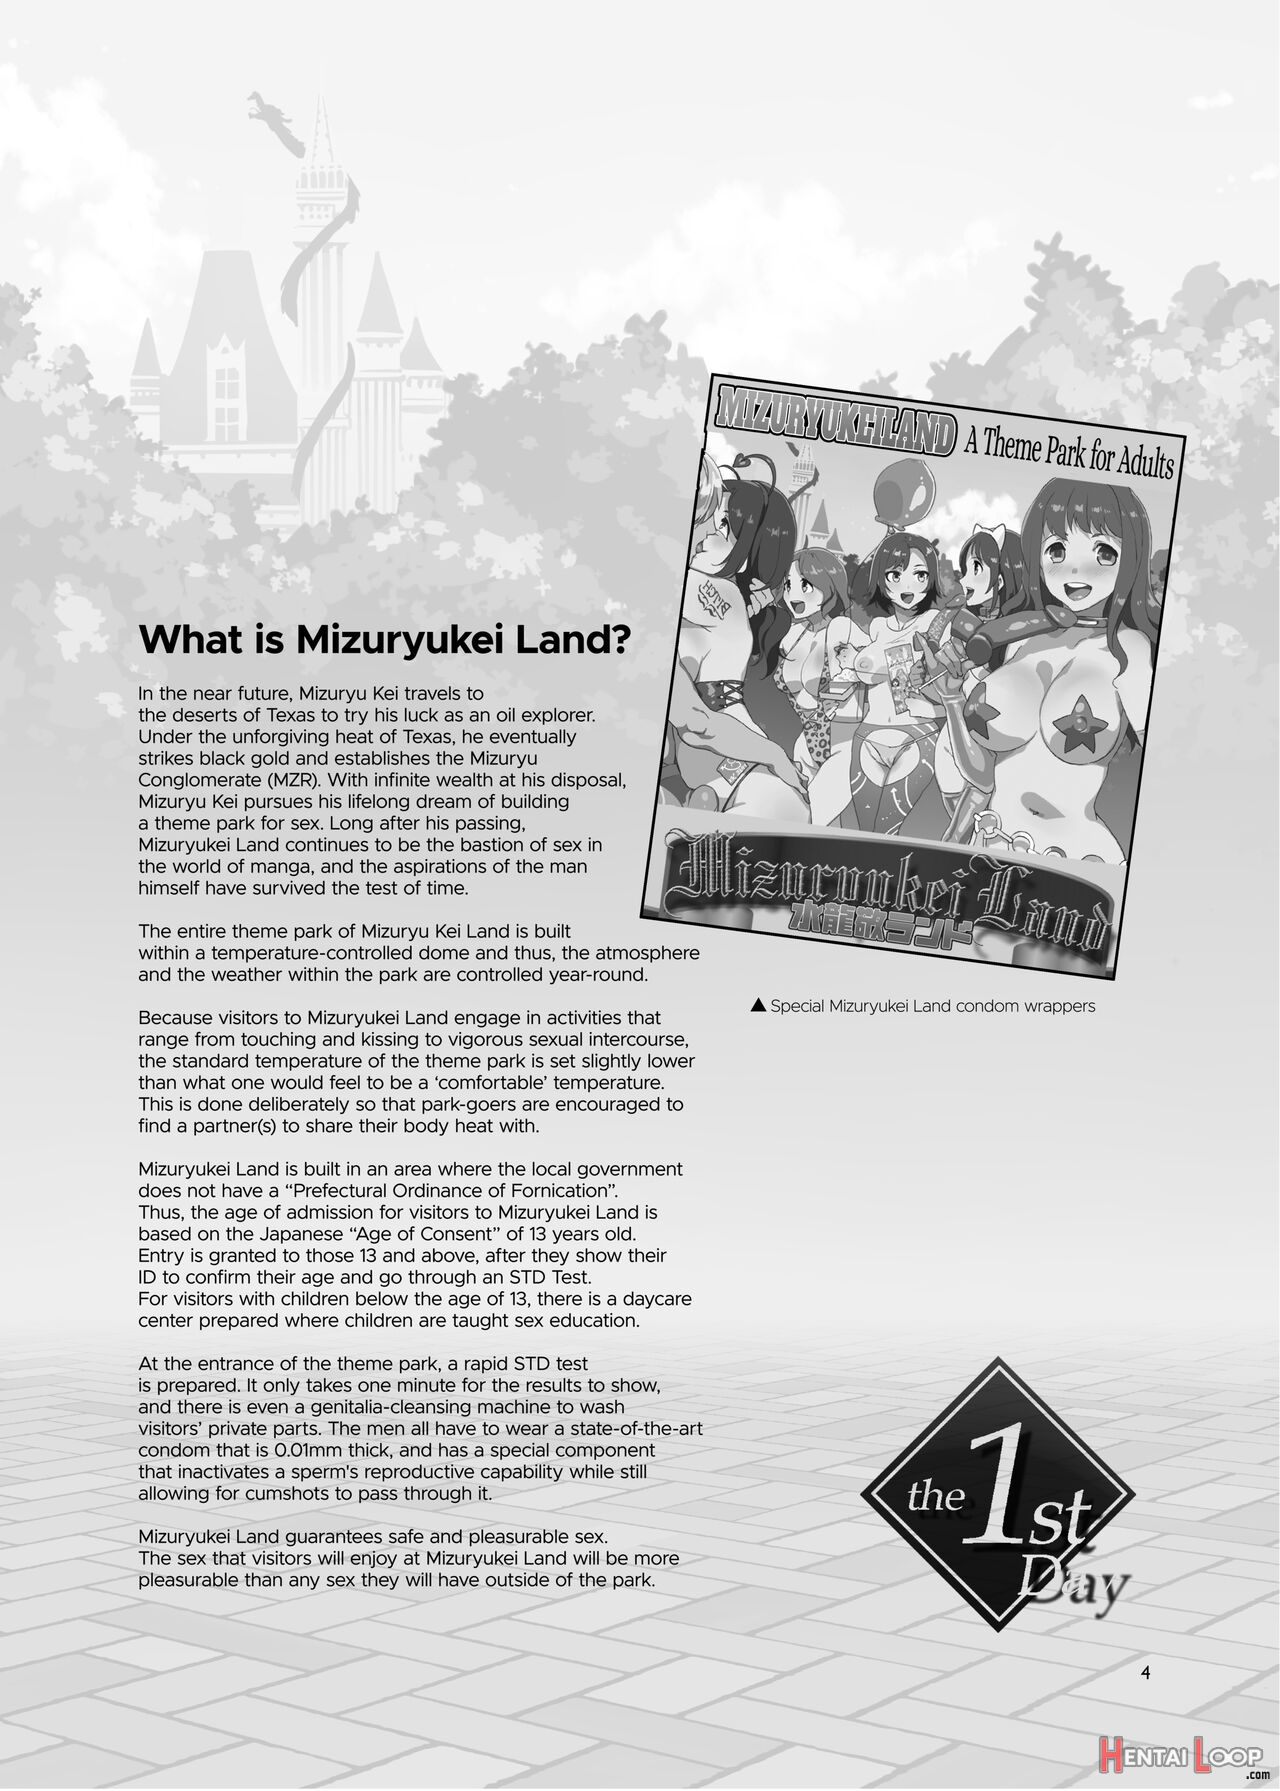 Welcome To Mizuryukei Land - The 1st Day page 4